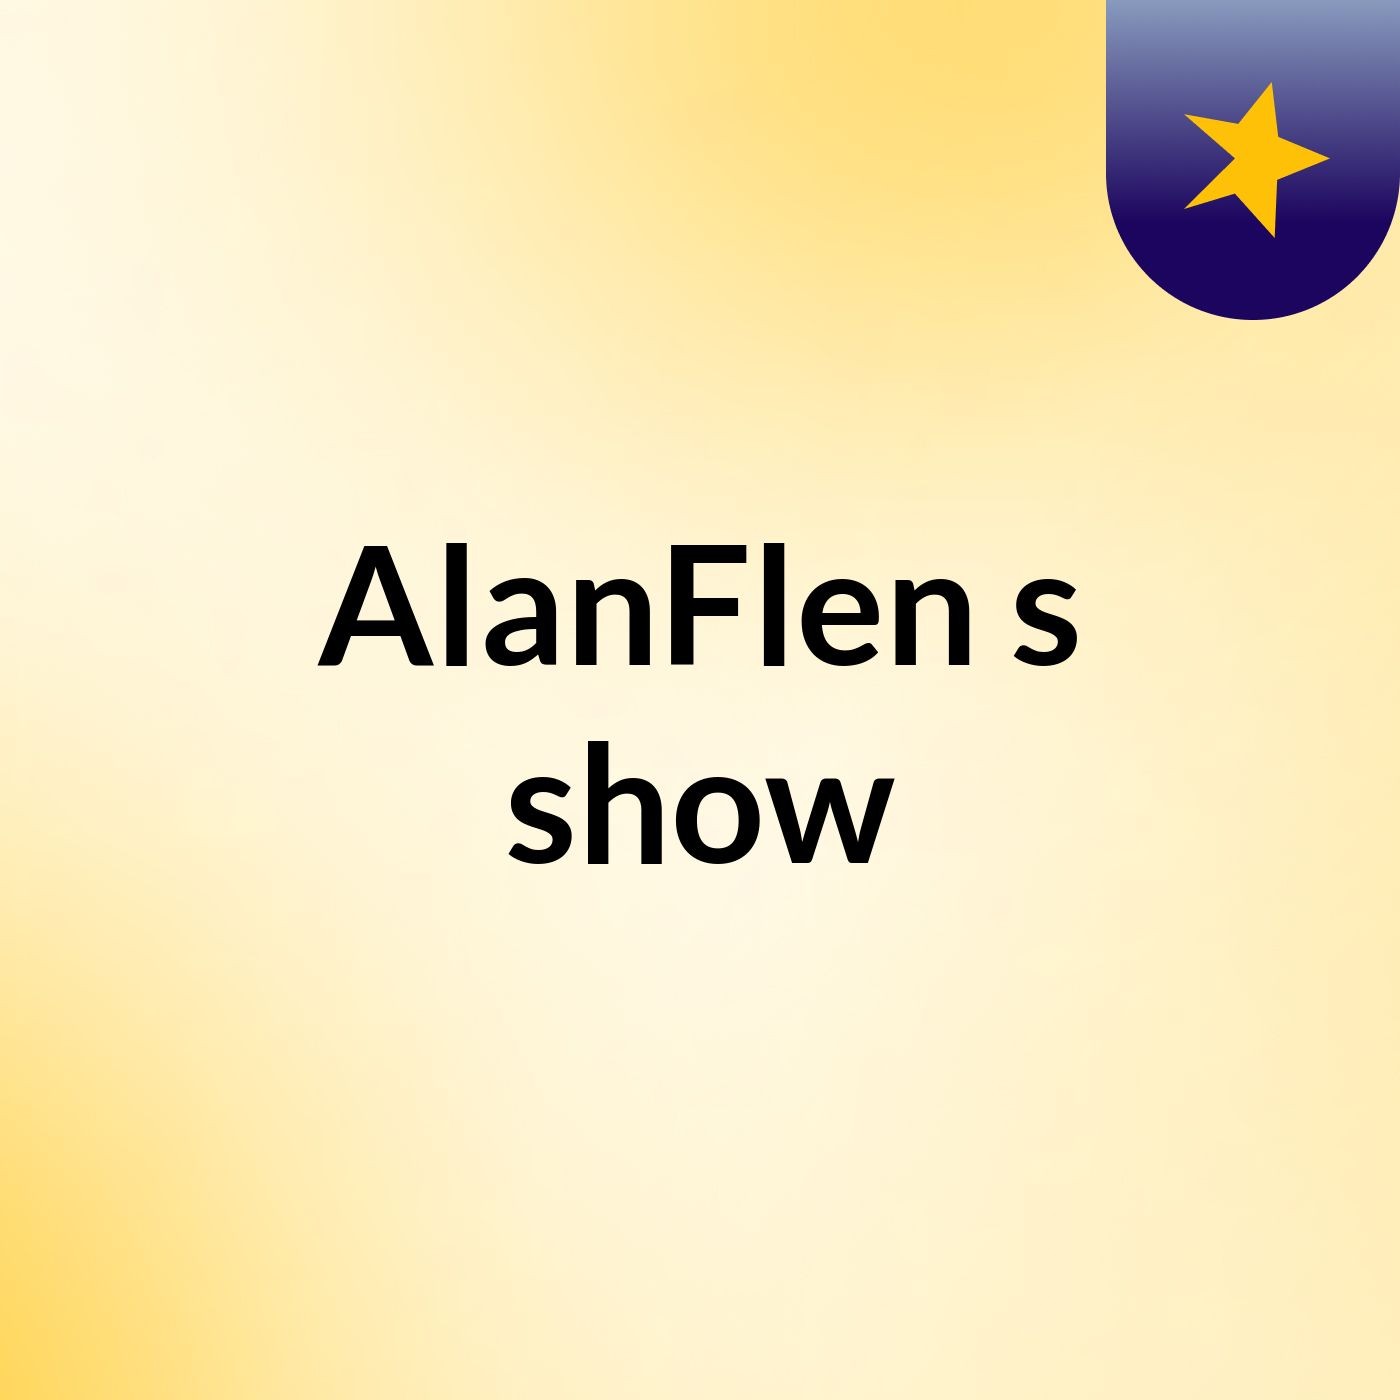 AlanFlen's show